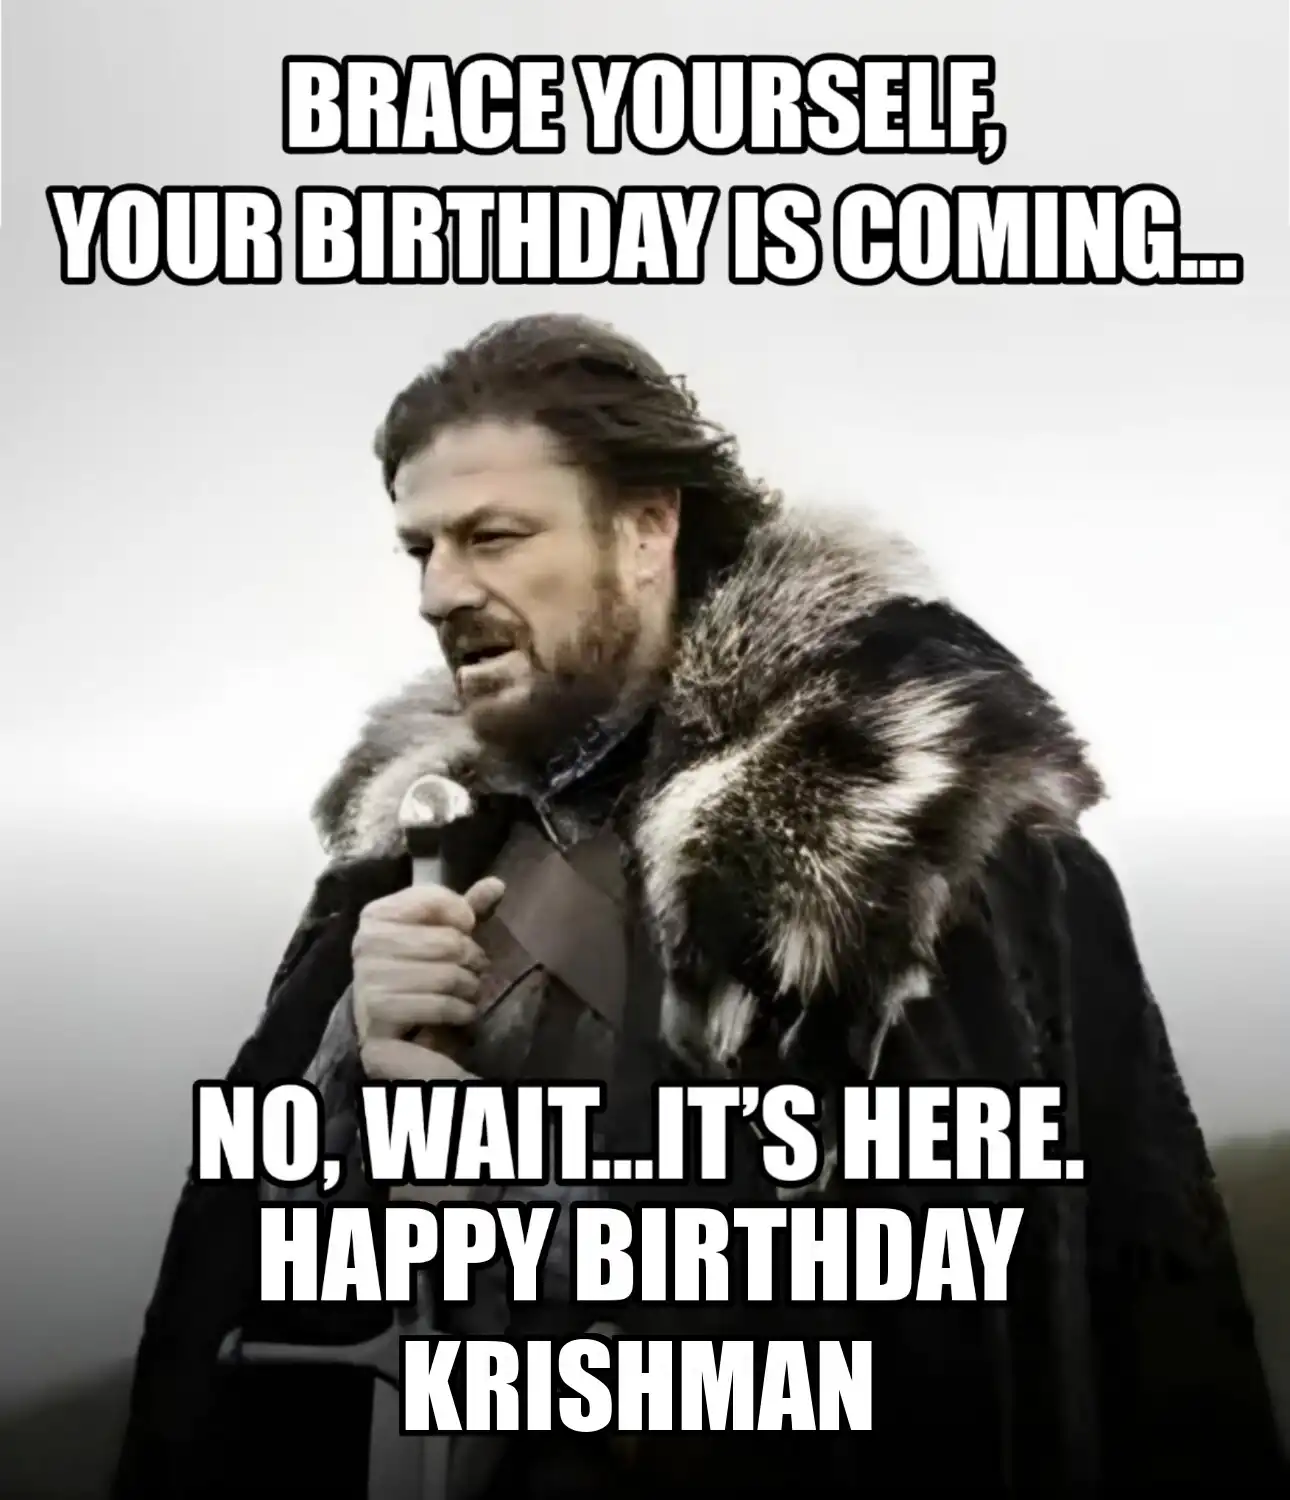 Happy Birthday Krishman Brace Yourself Your Birthday Is Coming Meme